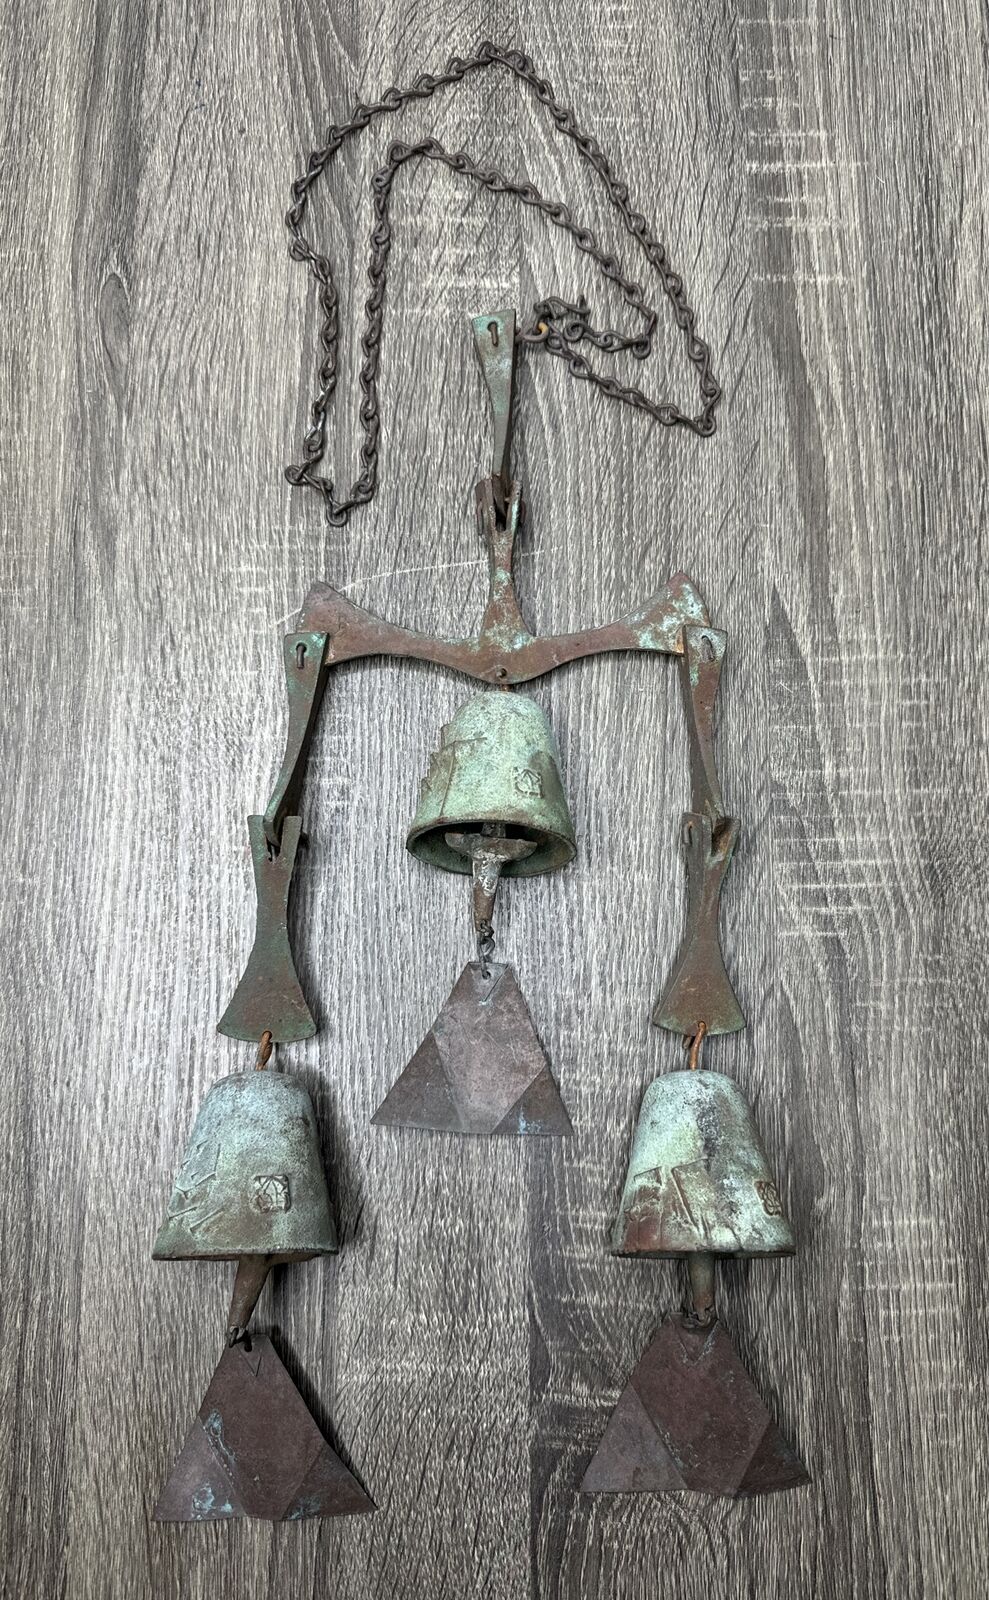 MCM Arcosanti Paolo Soleri Early Bronze Bell Original Hanging Bracket Wind Chime